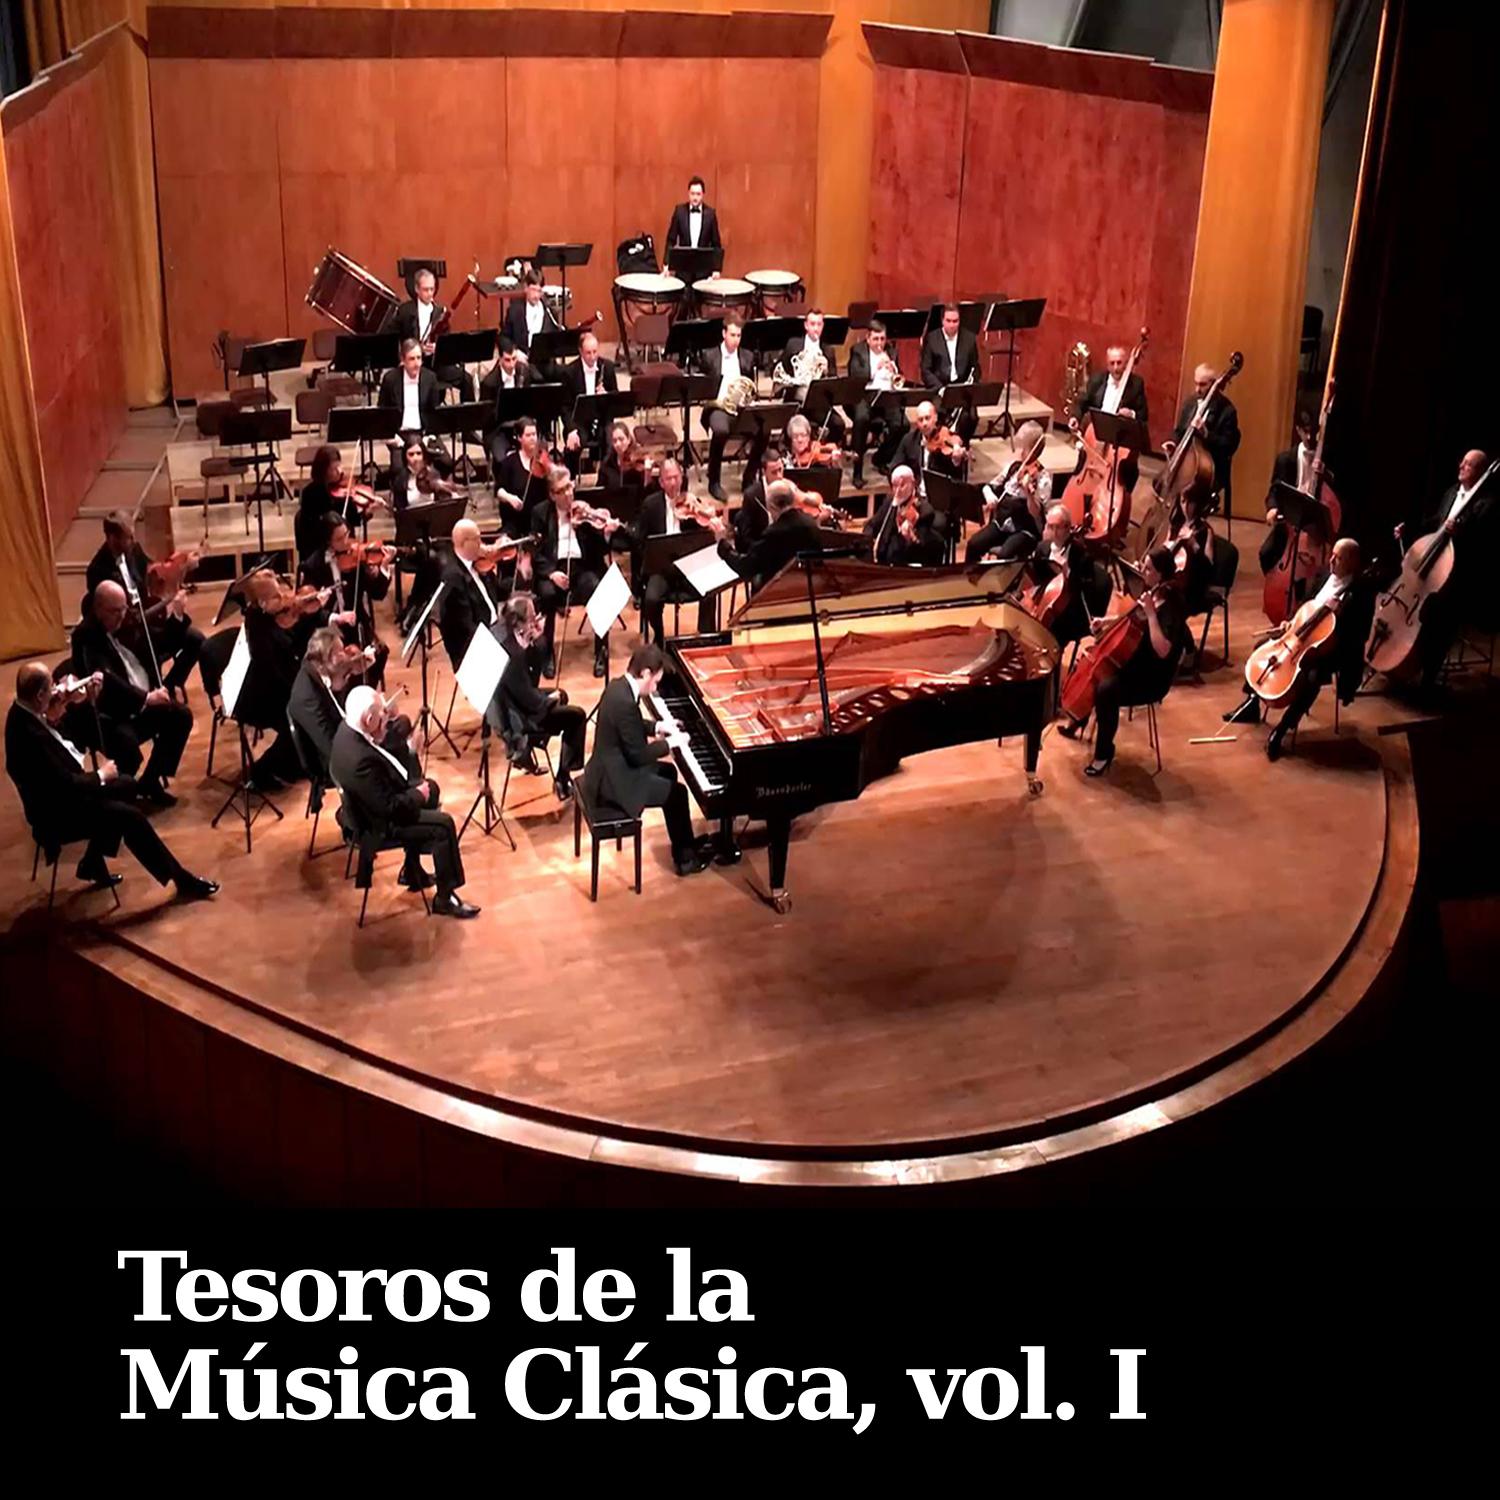 Concerto No. 1 in E Major, Op. 8 RV 269 "Spring'": I. Allegro